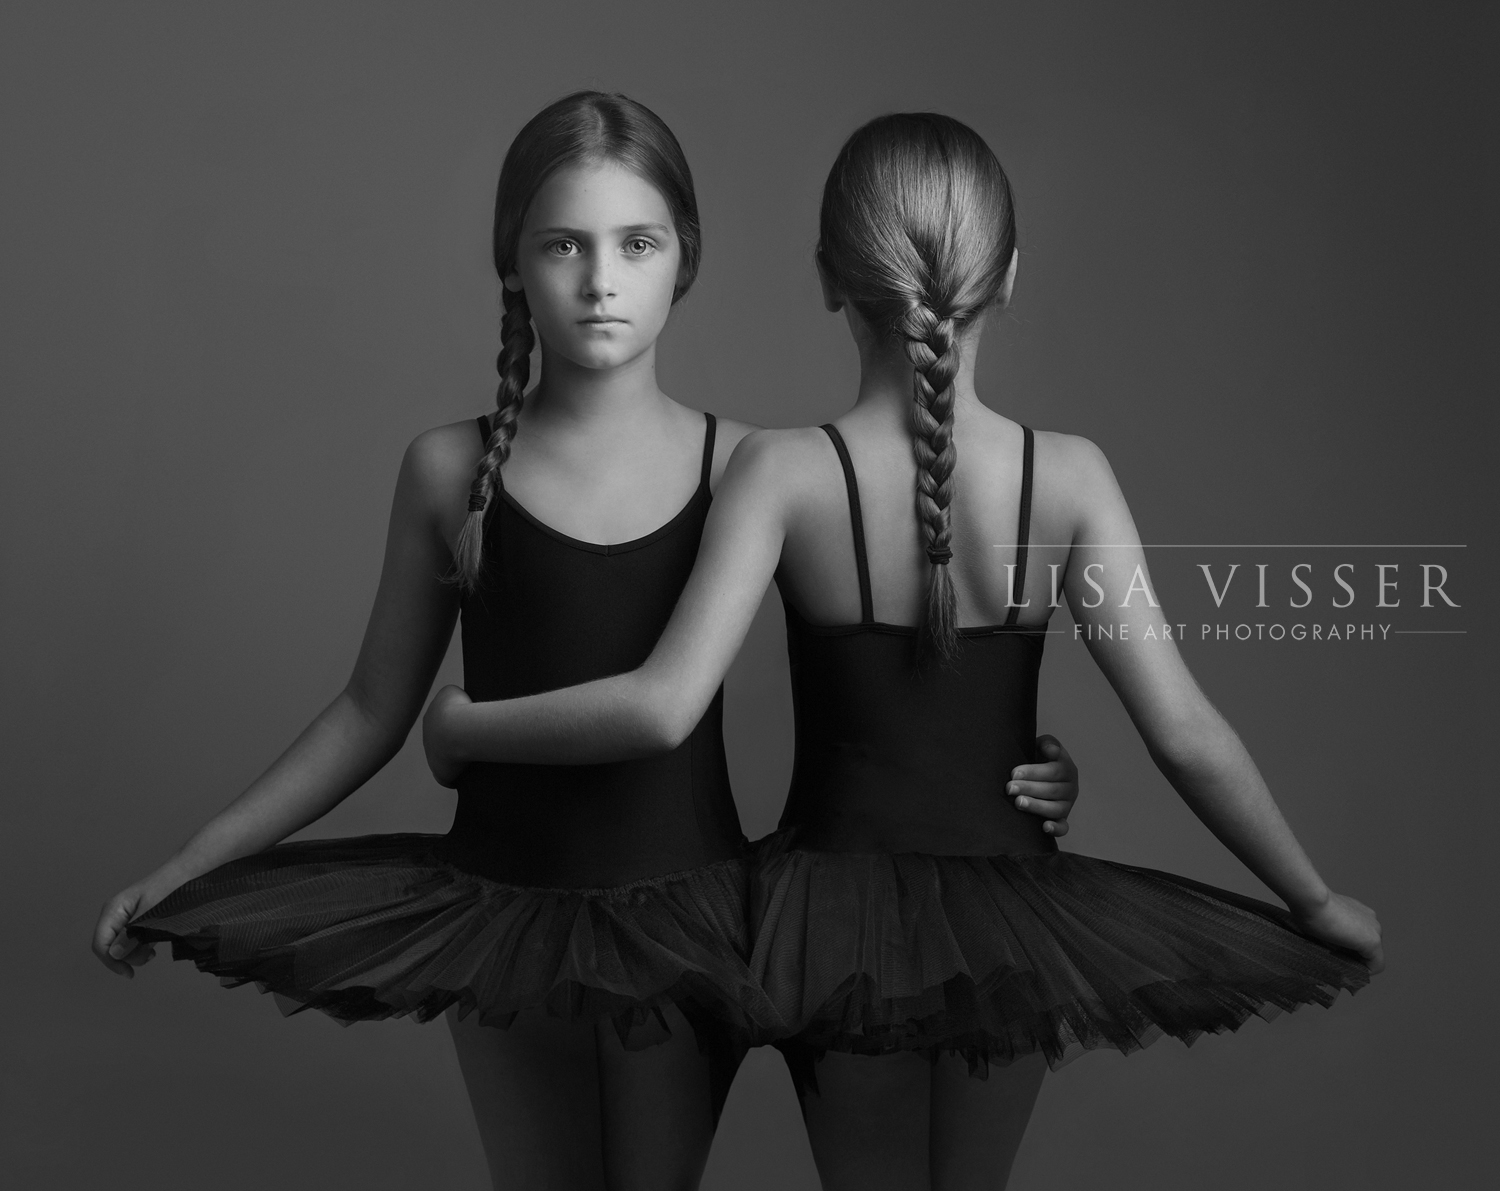 Lisa Visser Fine Art Photography: Fine Art Children's Photography